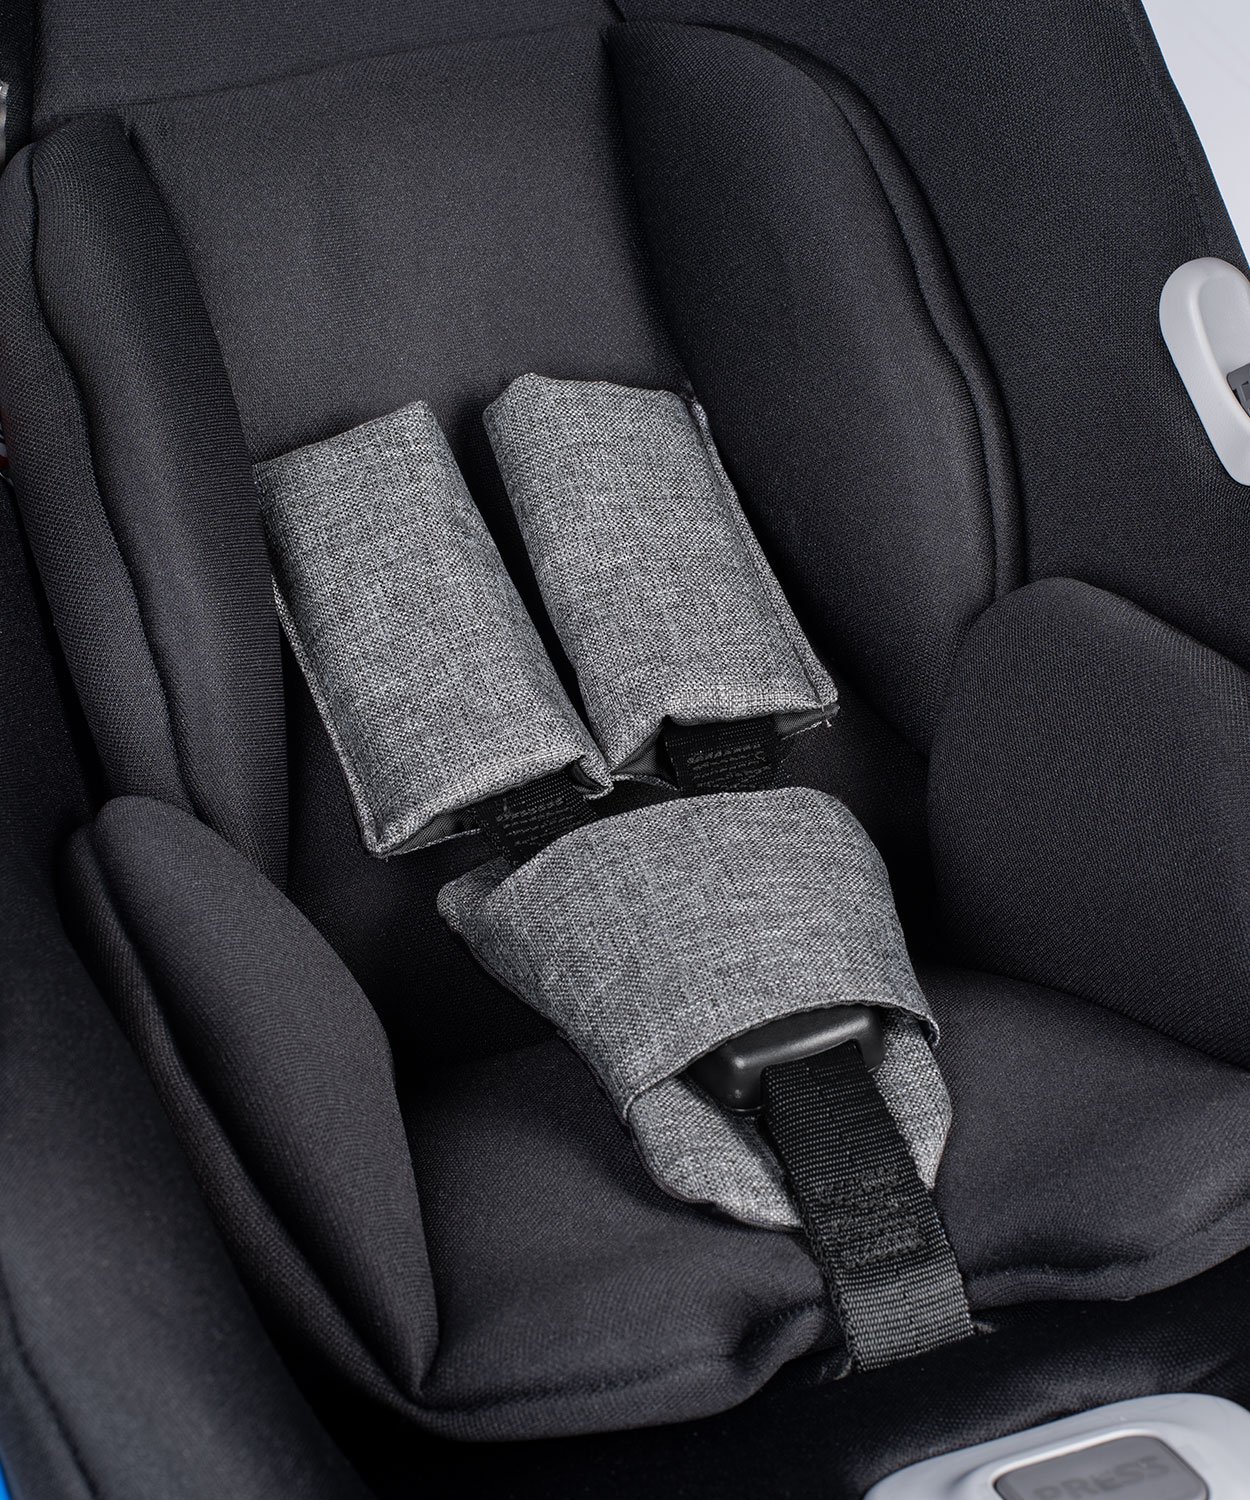 Venicci Car Seat Denim Grey - How To Install Venicci Baby Car Seat With Seatbelt